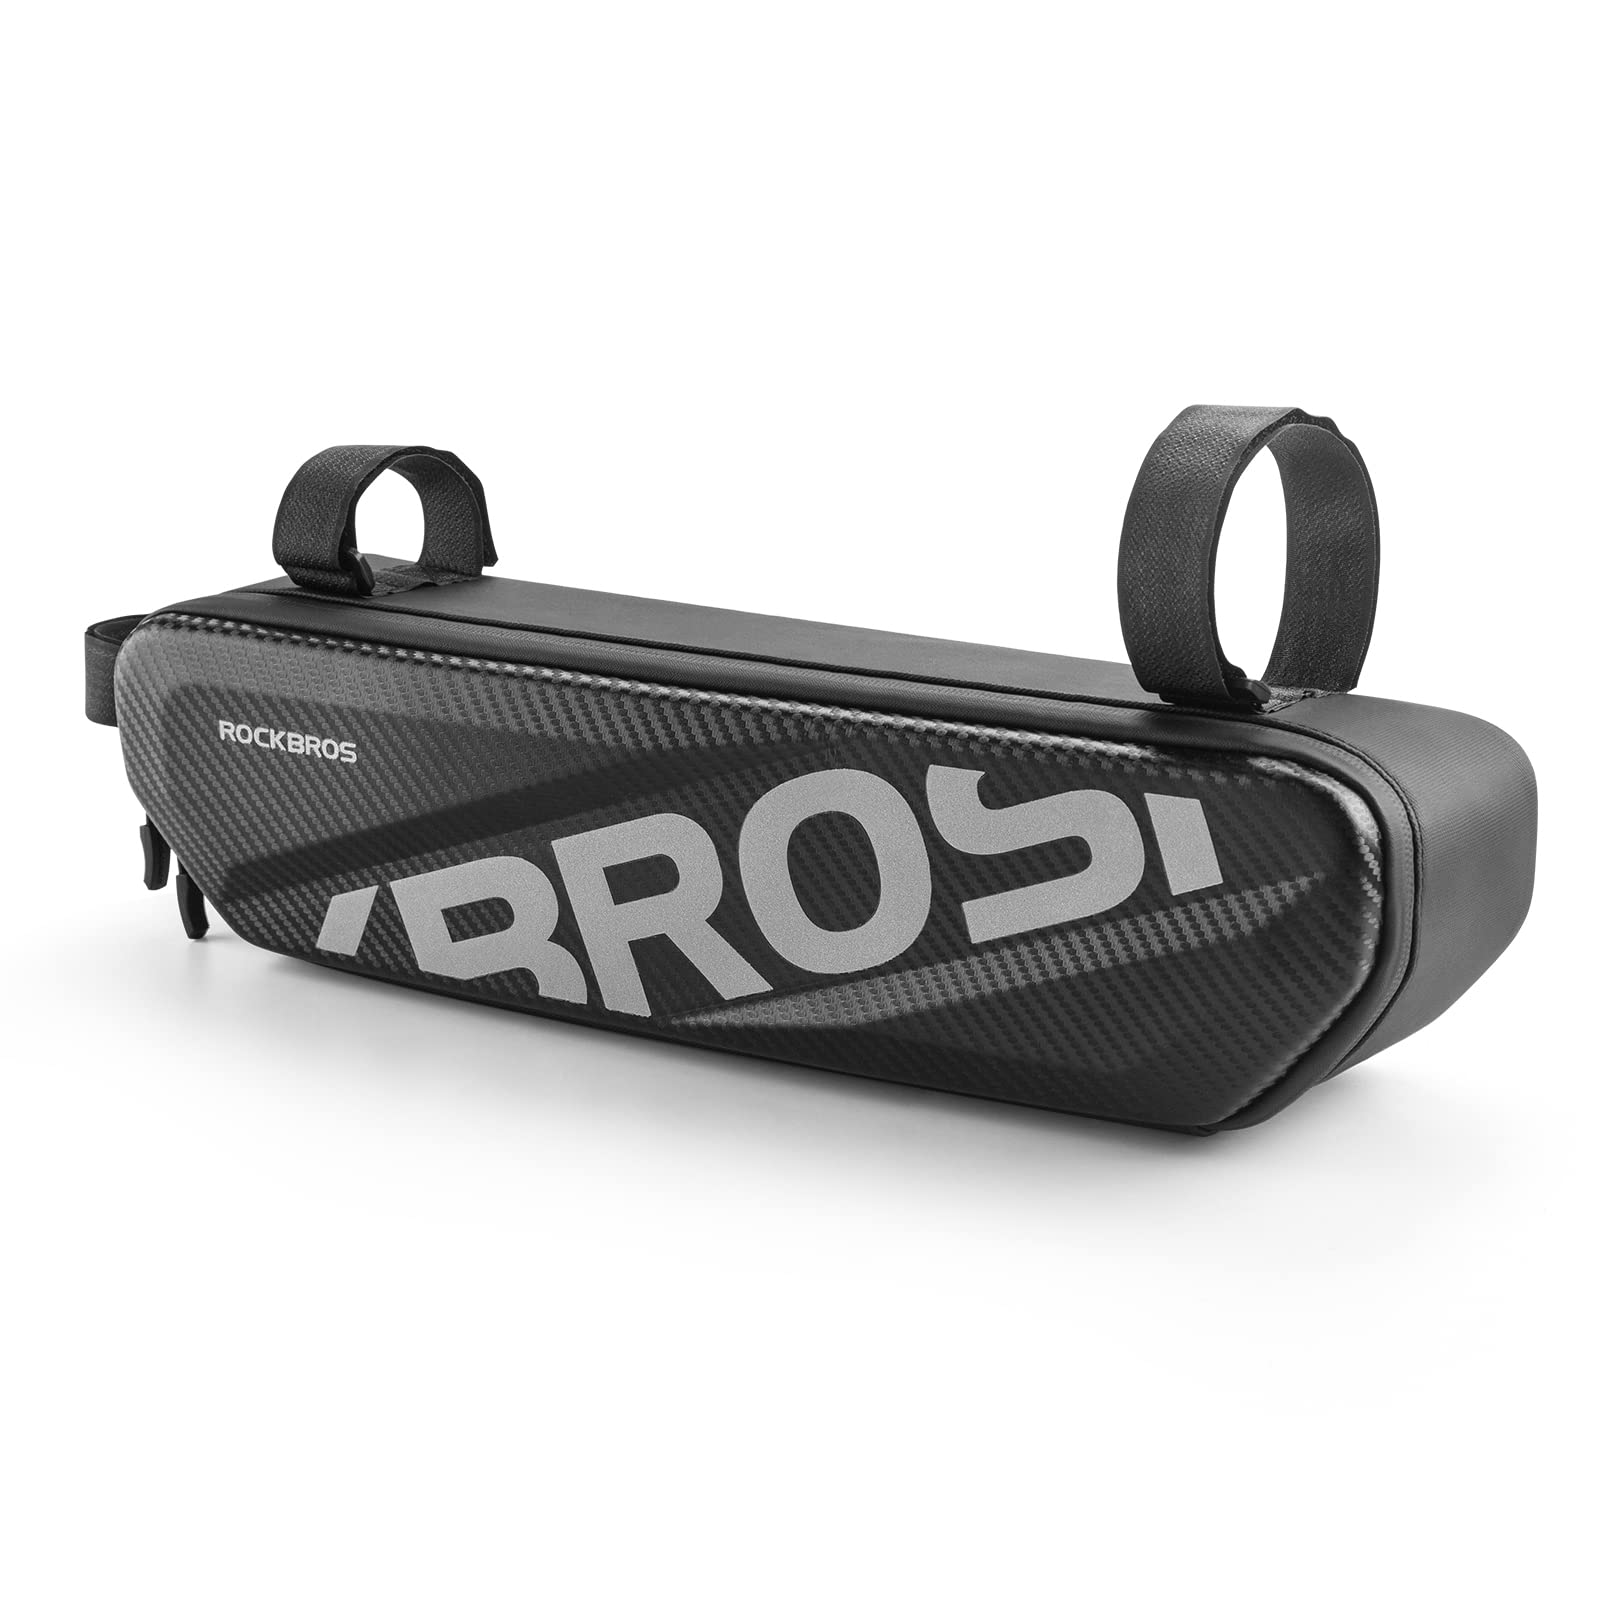 ROCKBROS Waterproof Bike Frame Bag for SUPER73 Electric Bikes